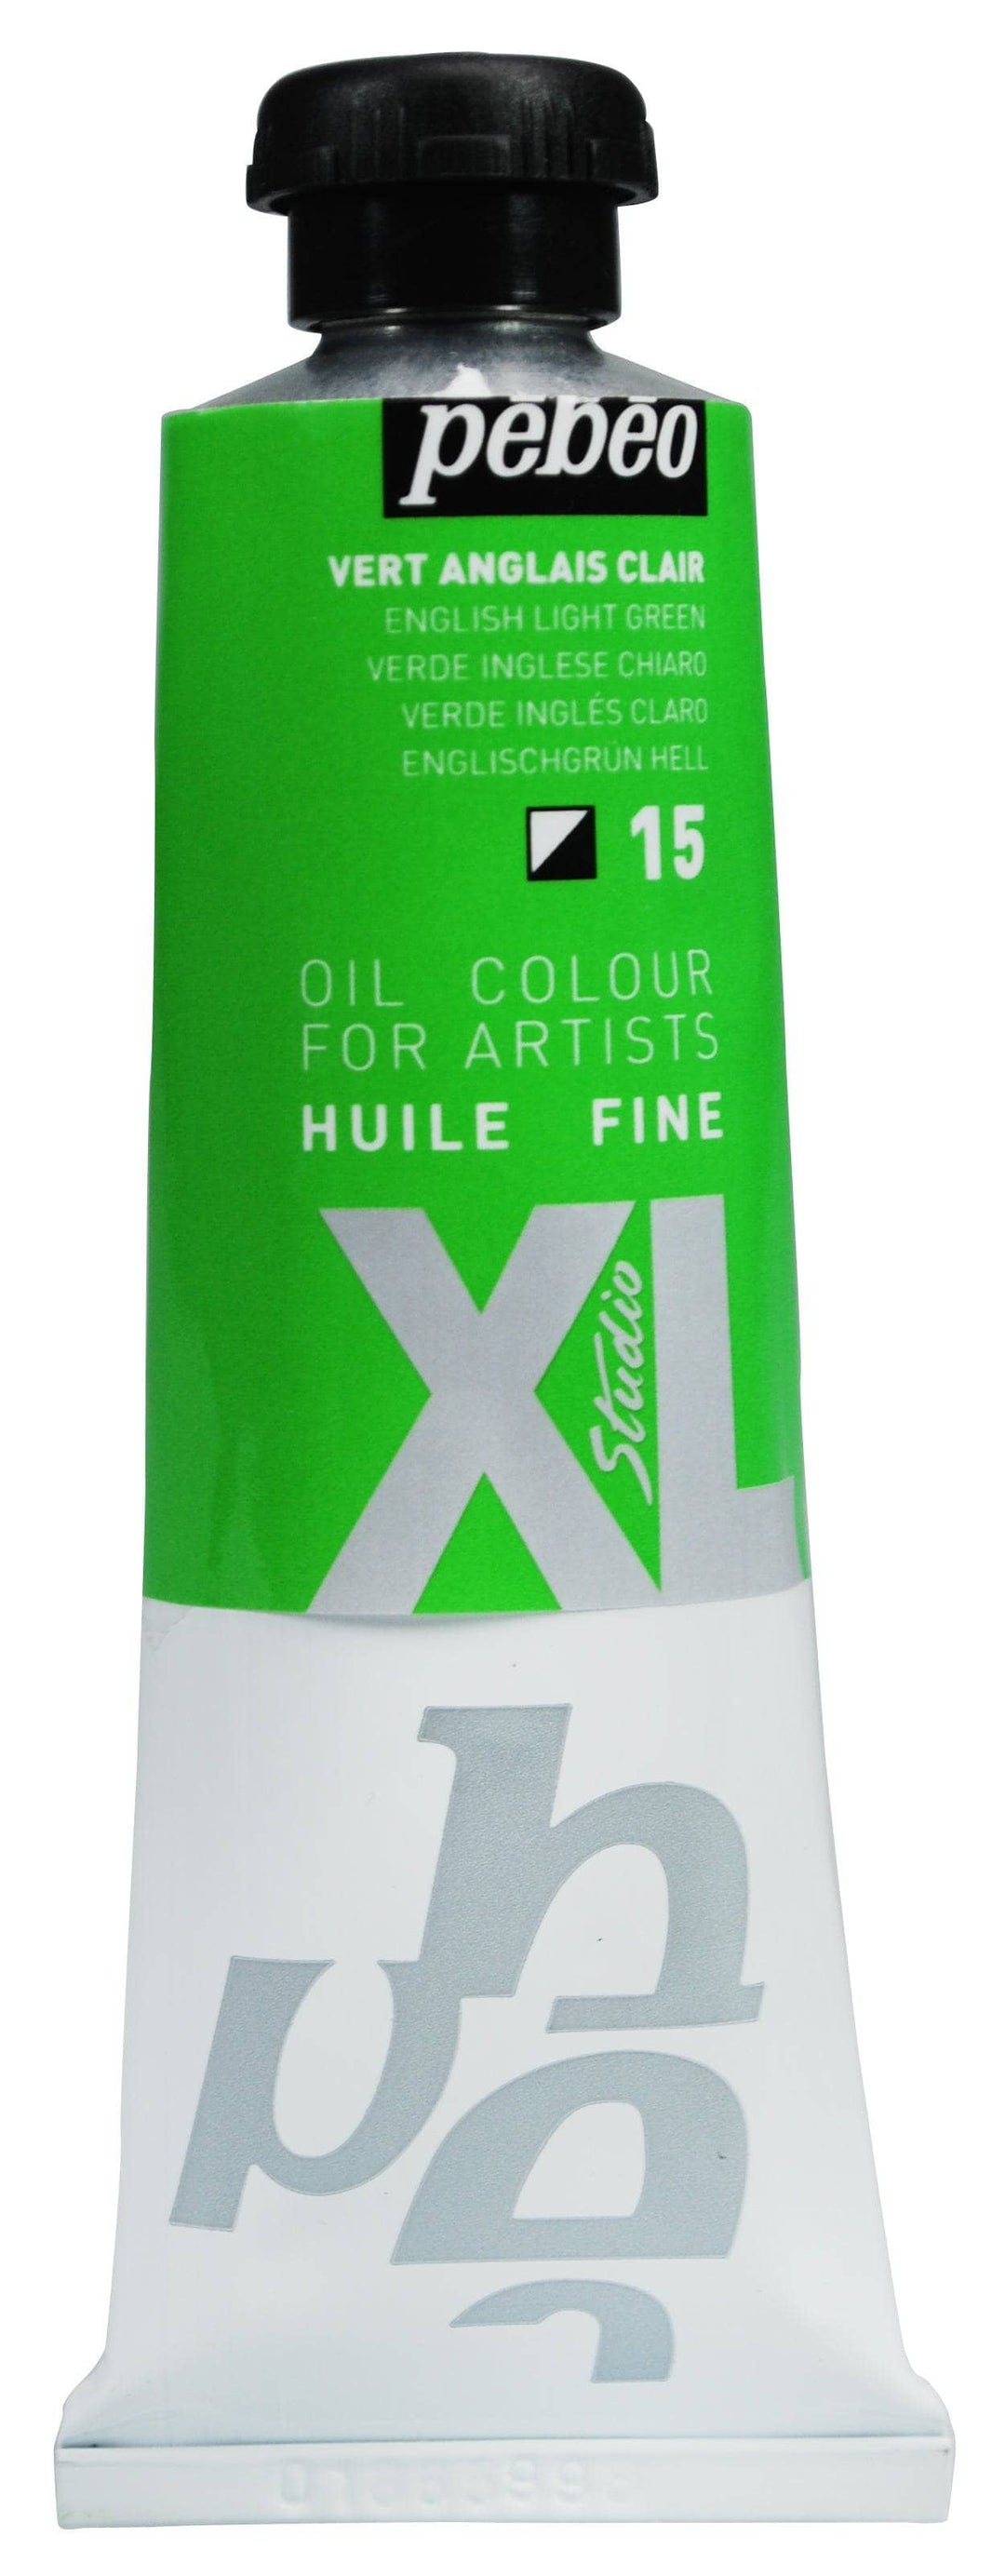 Huile fine Studio XL 37ml - Vert Anglais Clair
PB937015